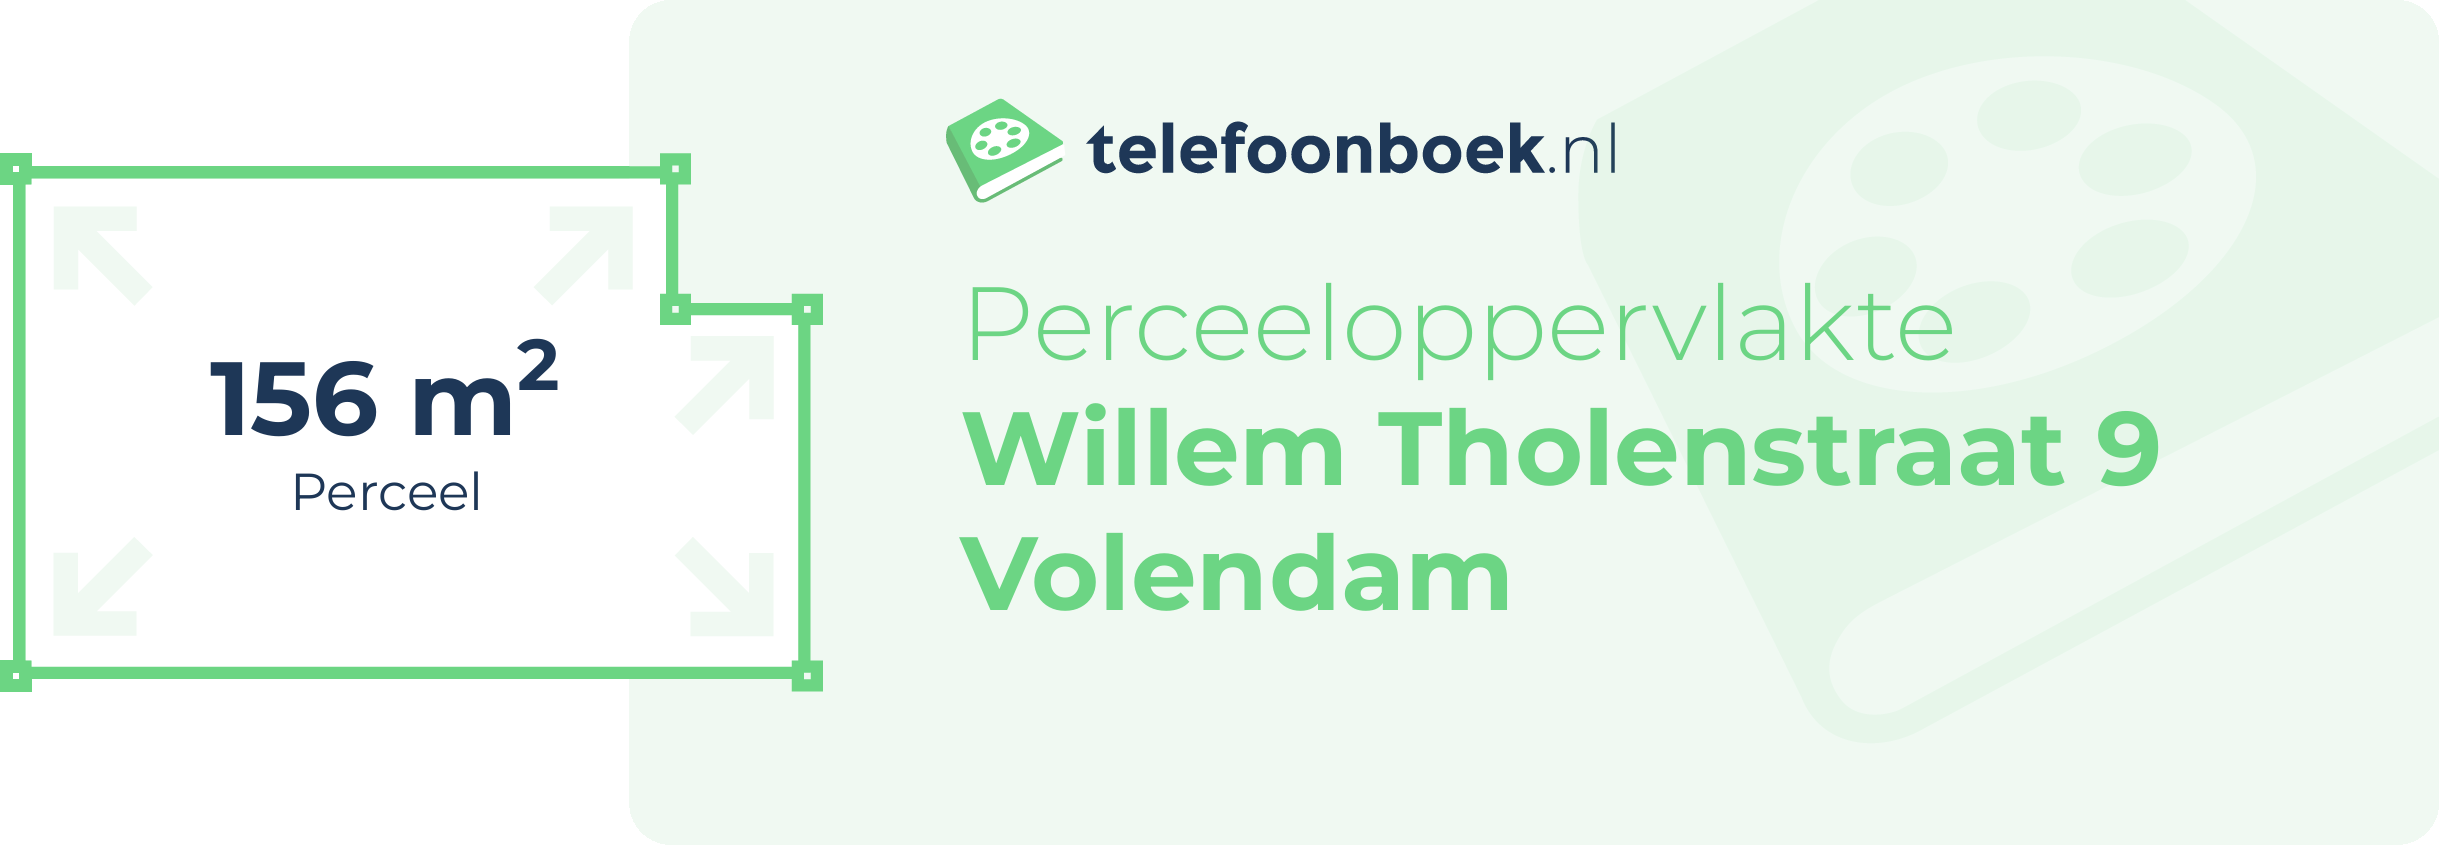 Perceeloppervlakte Willem Tholenstraat 9 Volendam